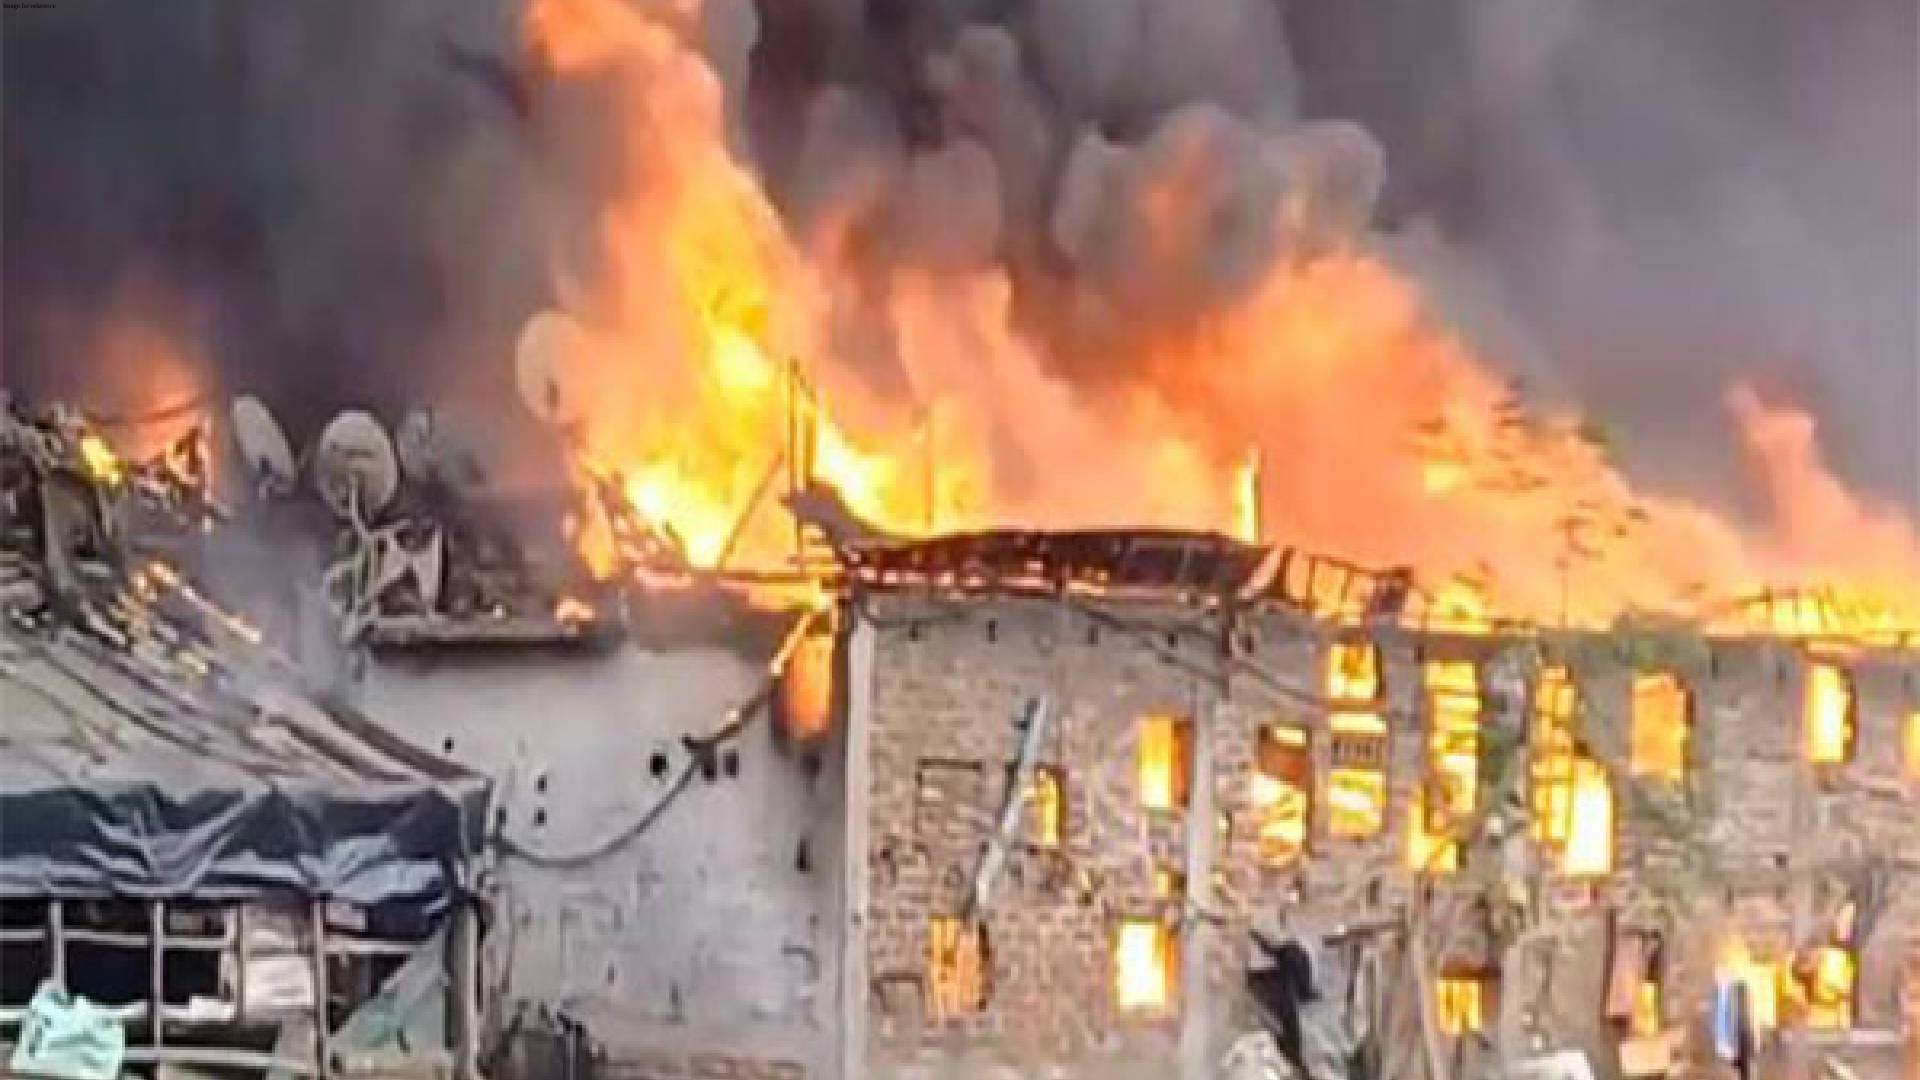 Kolkata: Fire breaks out in slum area, several shanties destroyed